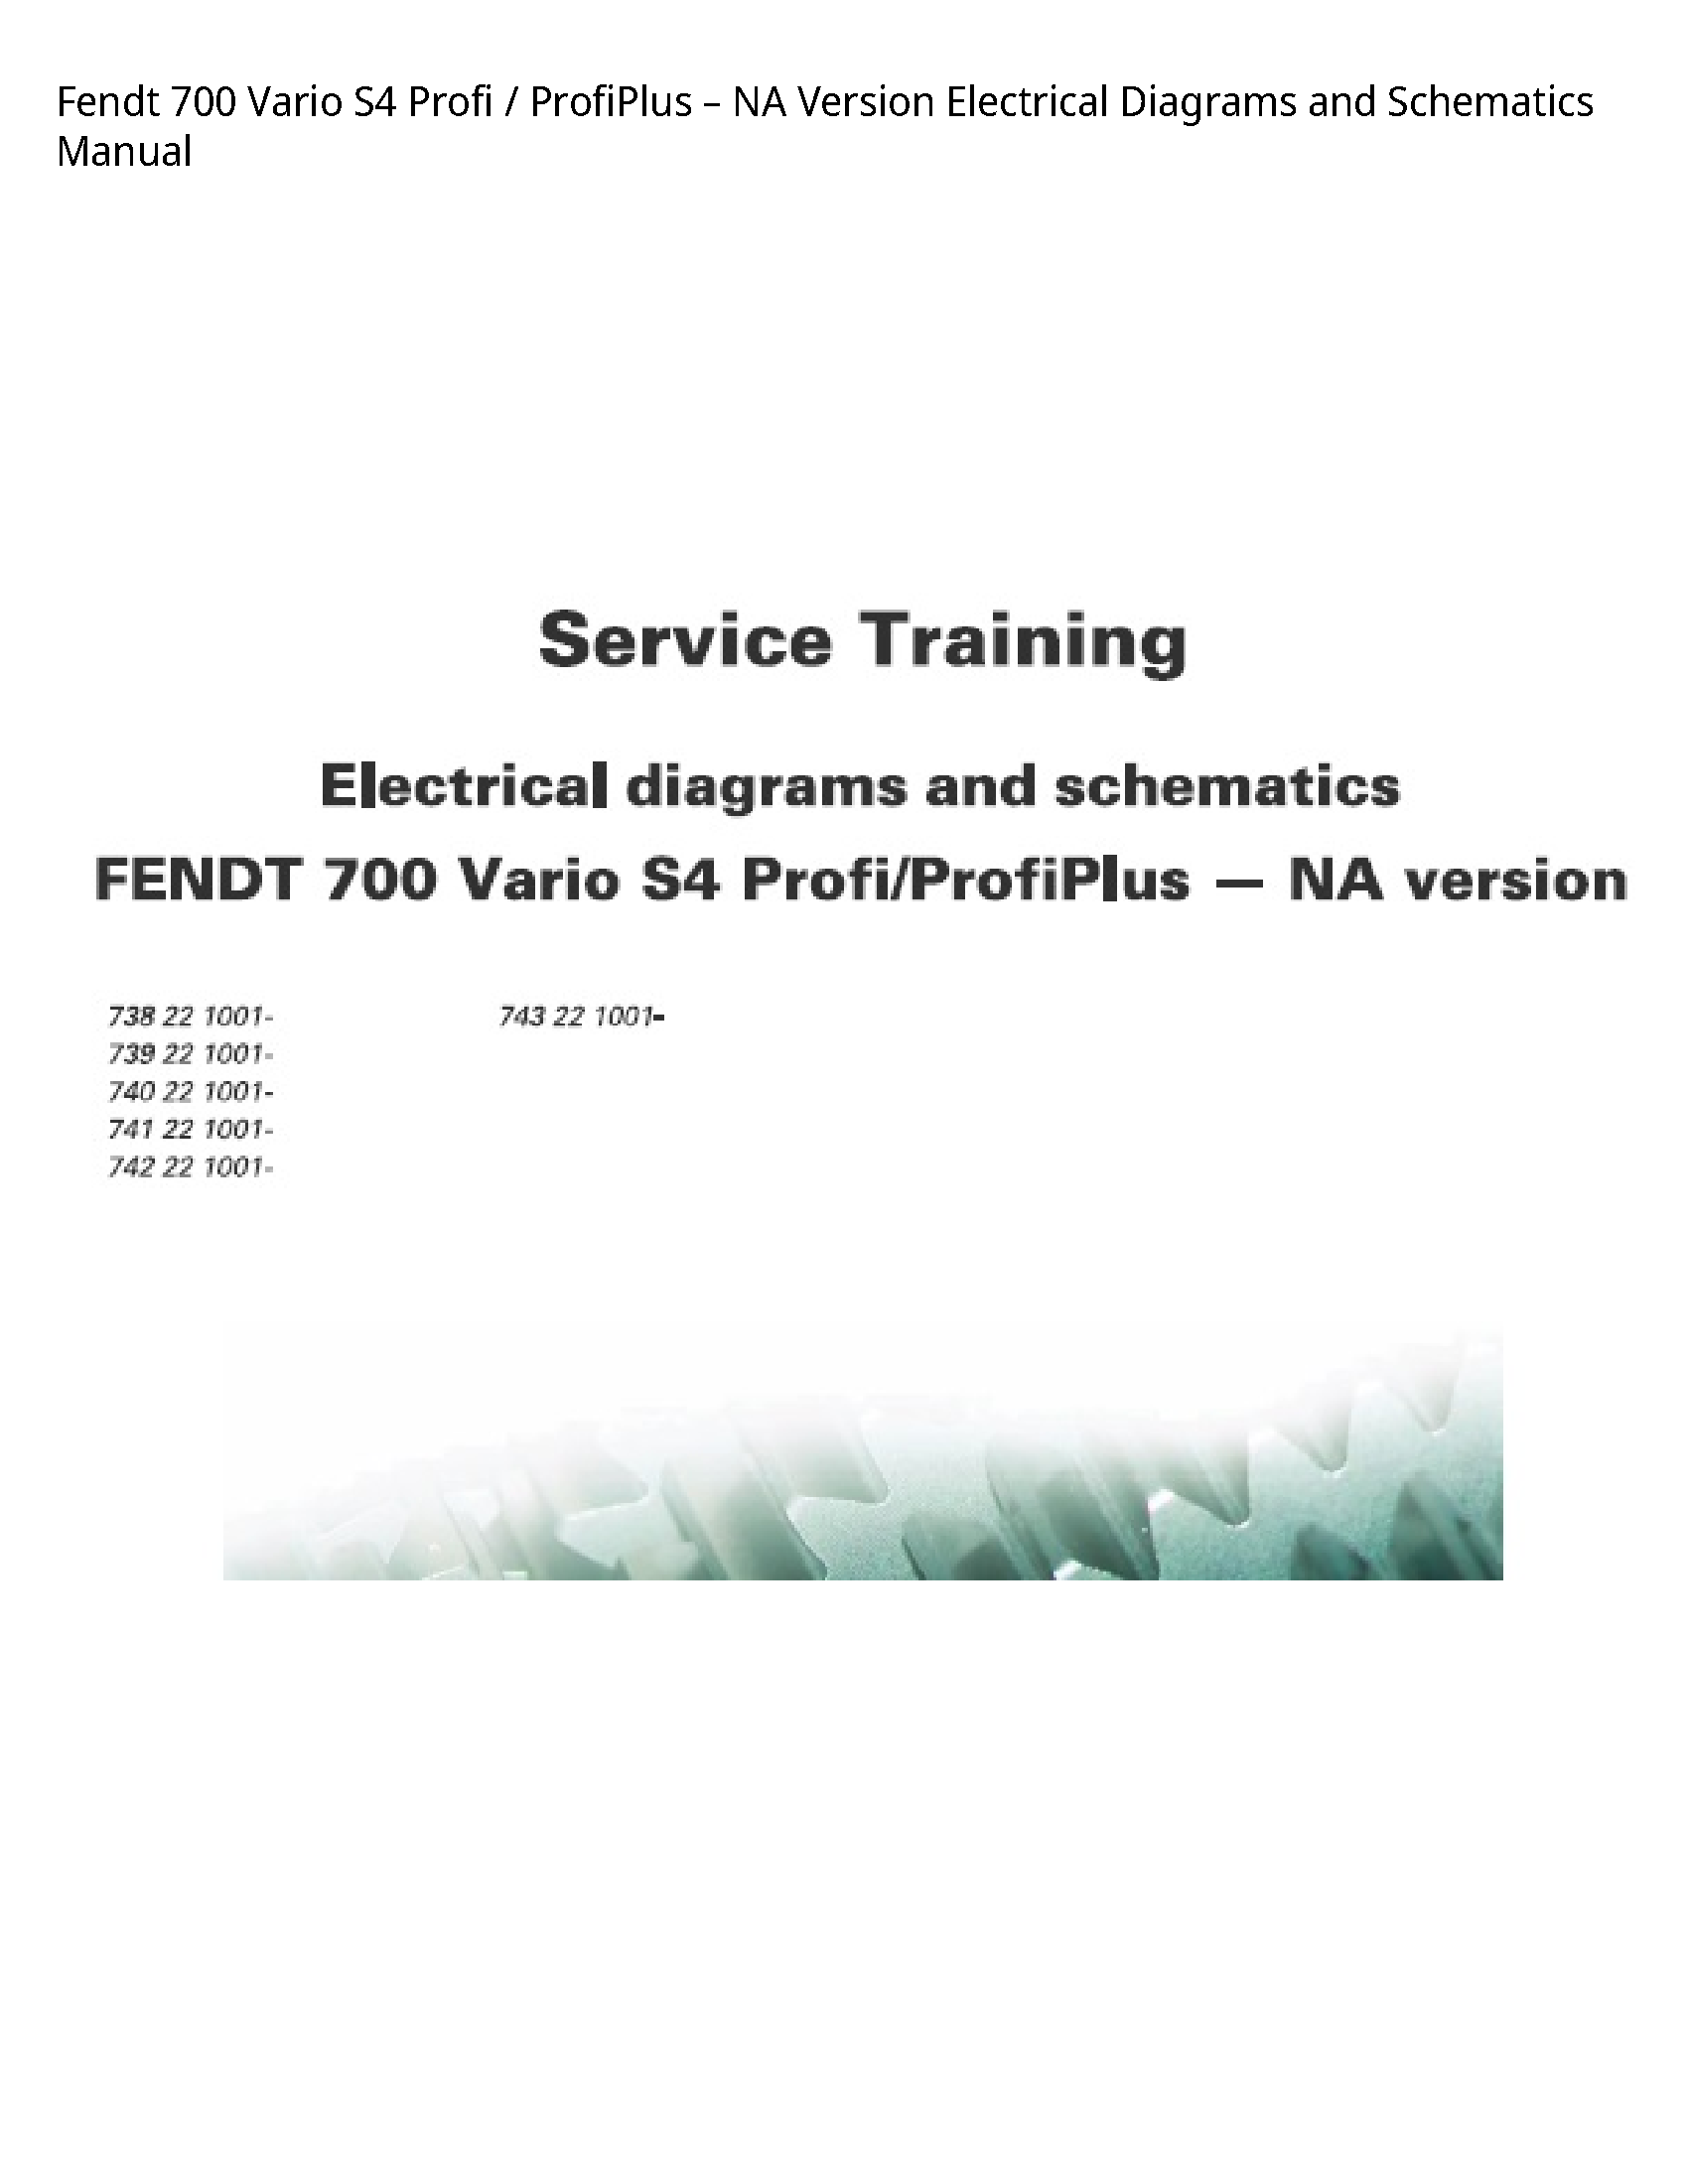 Fendt 700 Vario Profi ProfiPlus NA Version Electrical Diagrams  Schematics manual